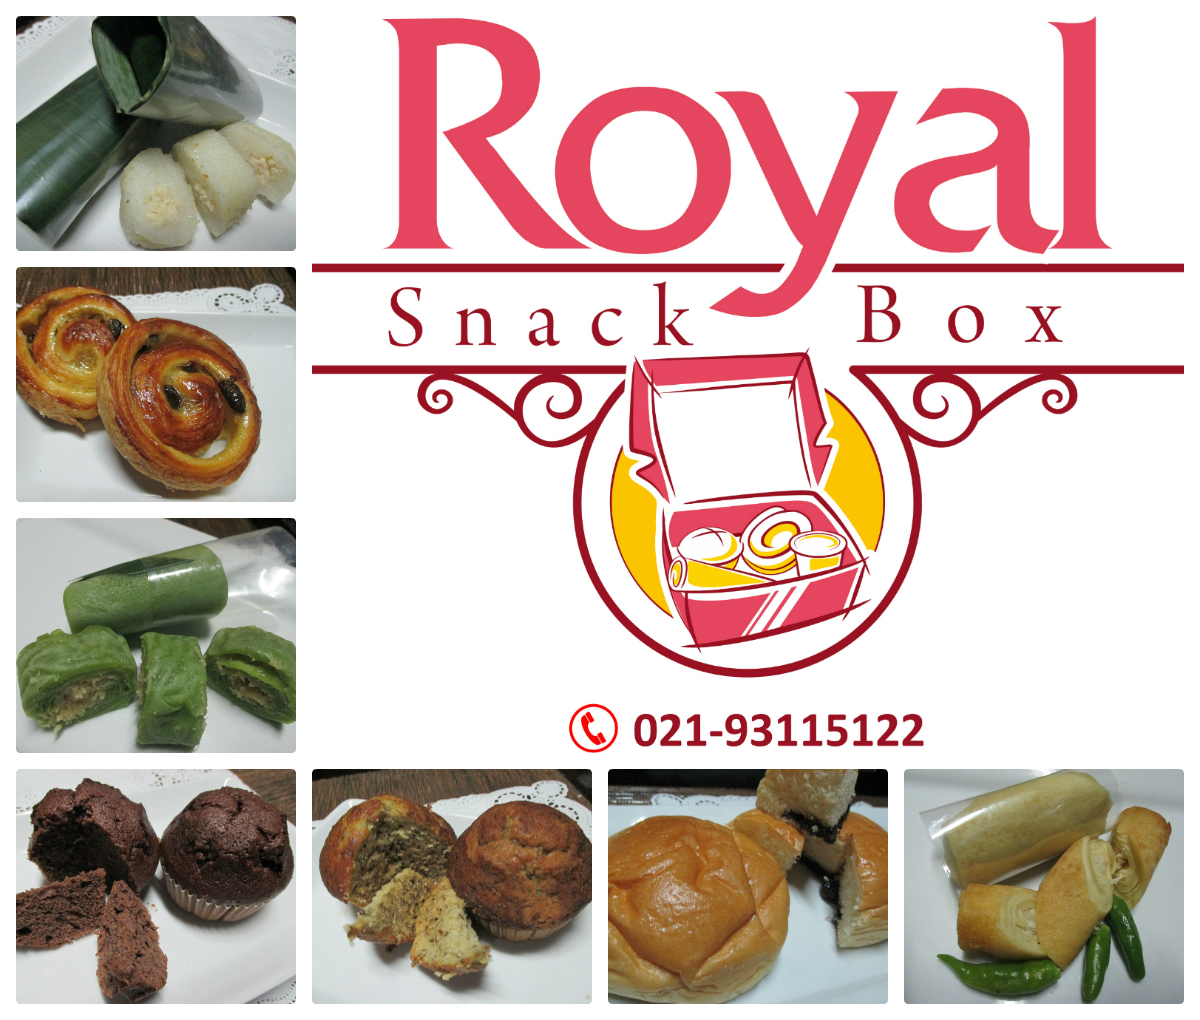 Daftar Menu Buka Puasa Bersama | Royal Snack Box